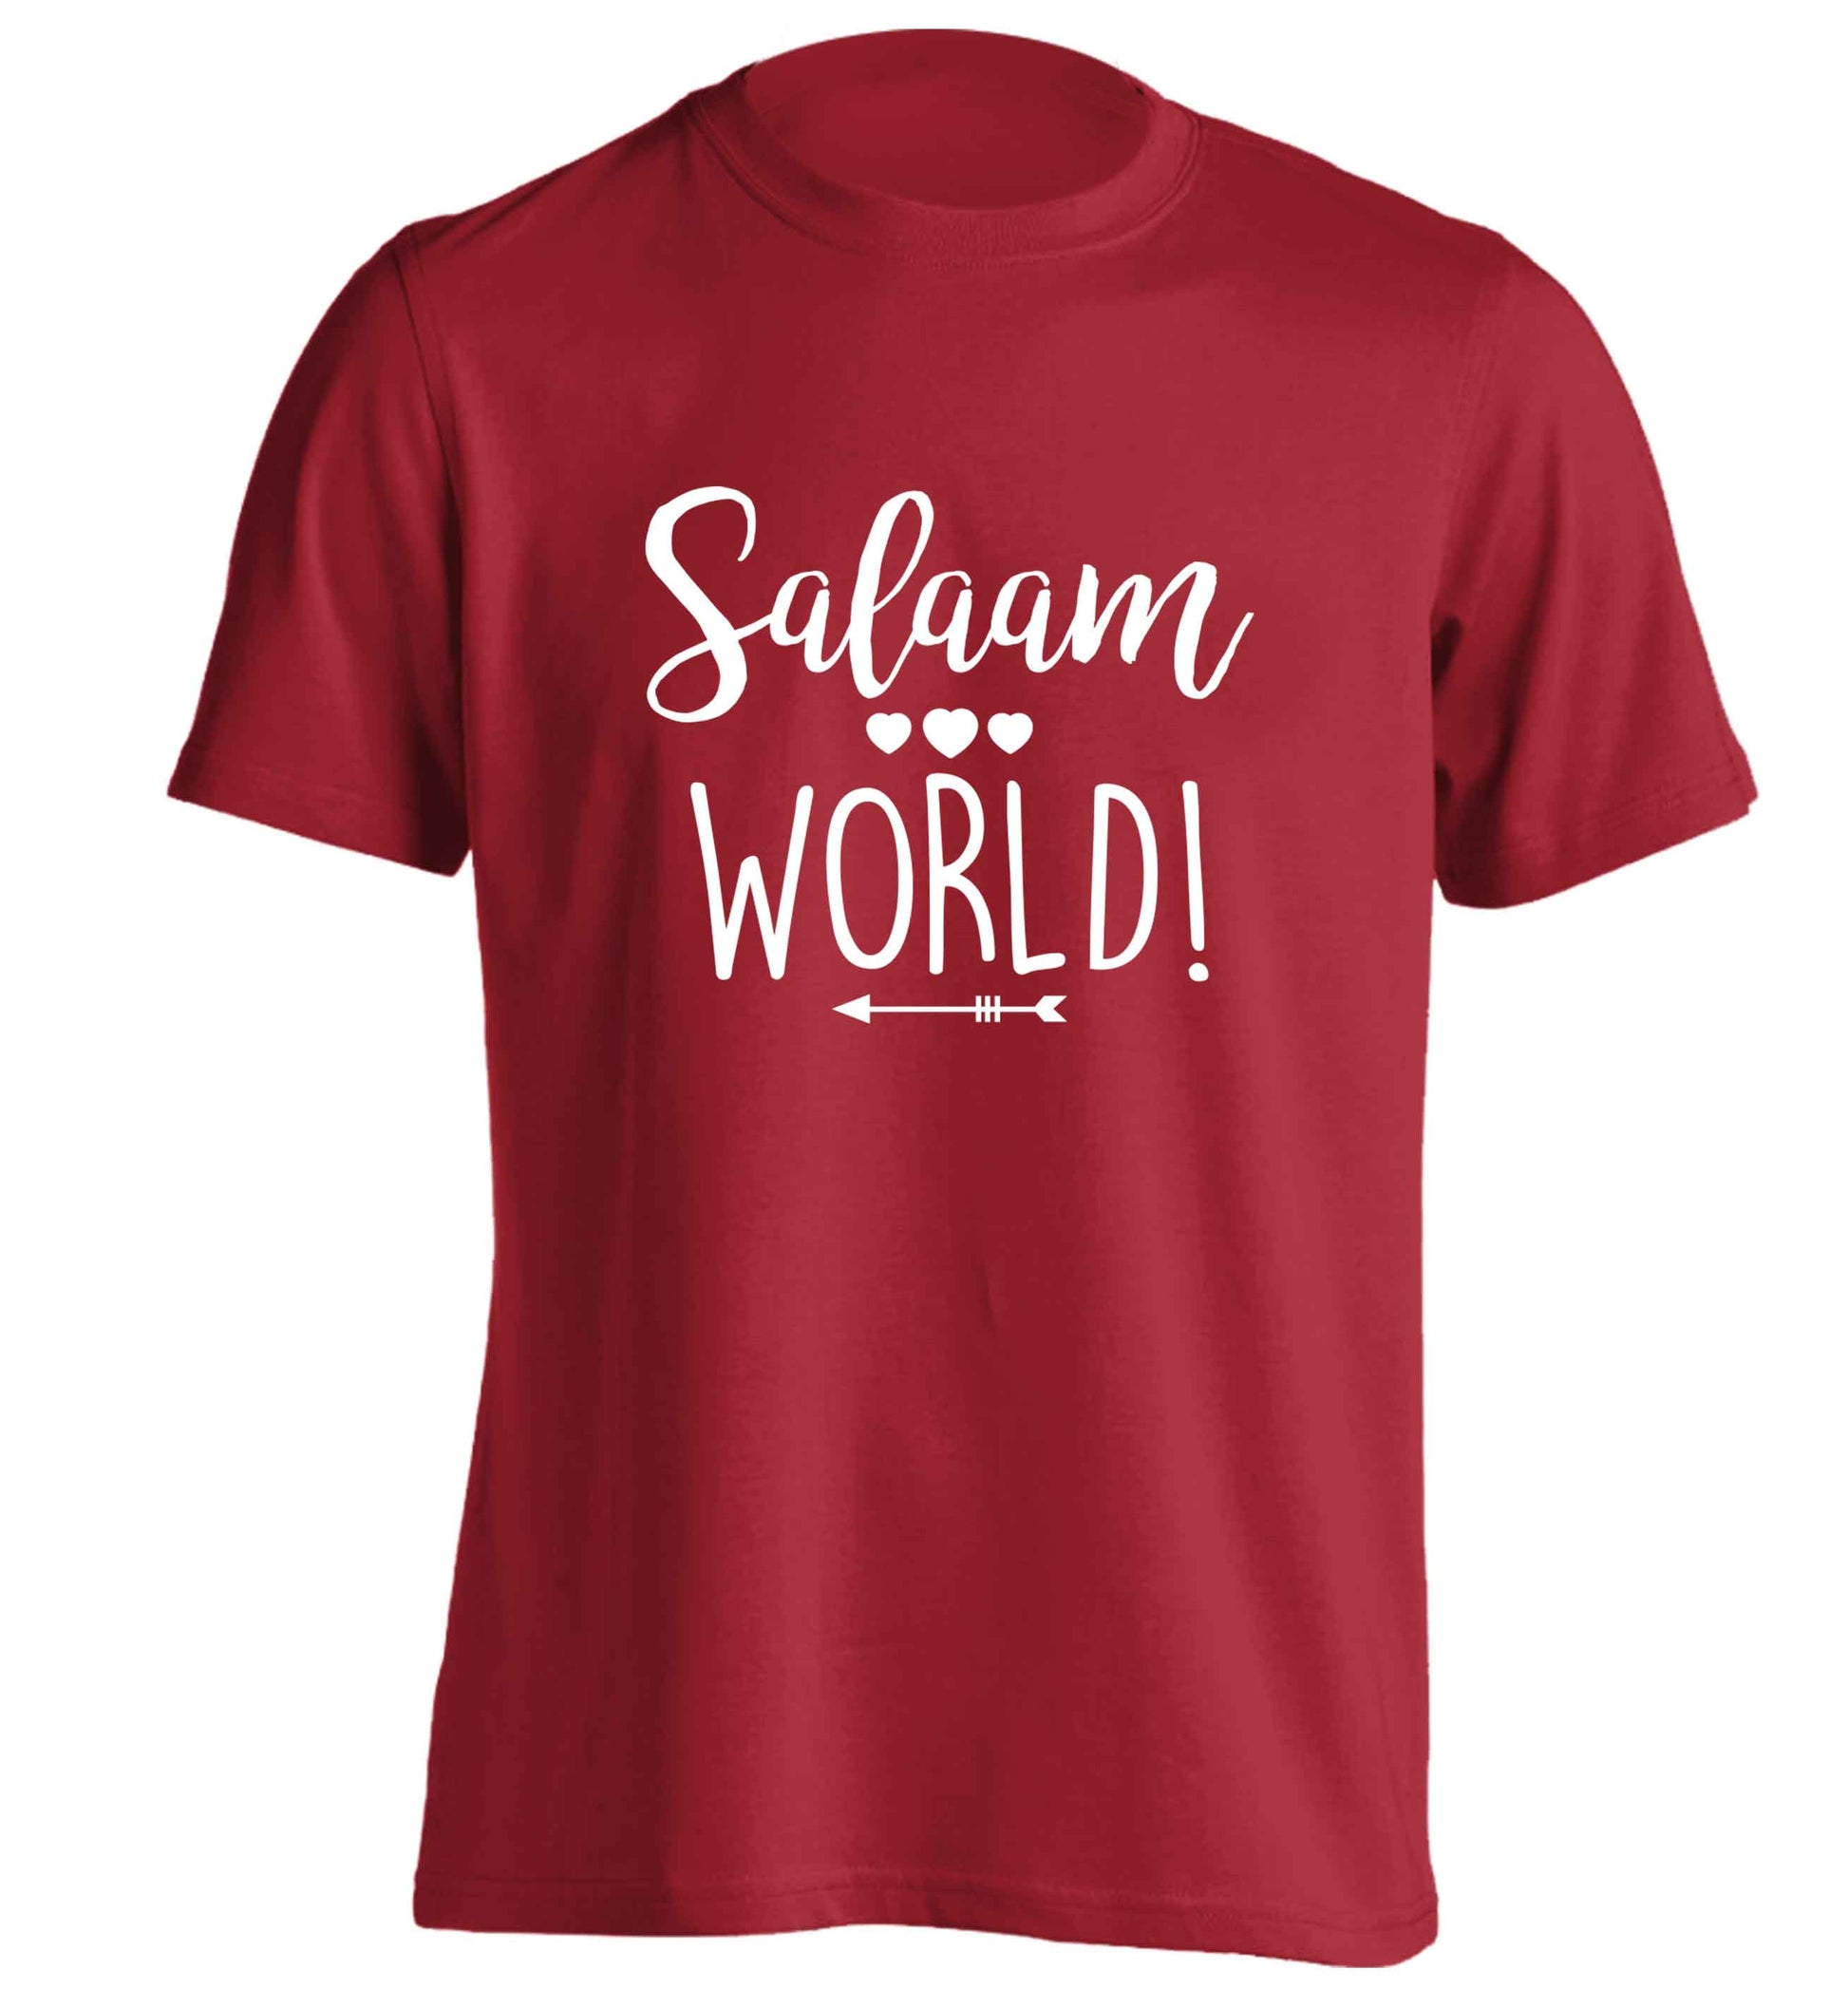 Salaam world adults unisex red Tshirt 2XL